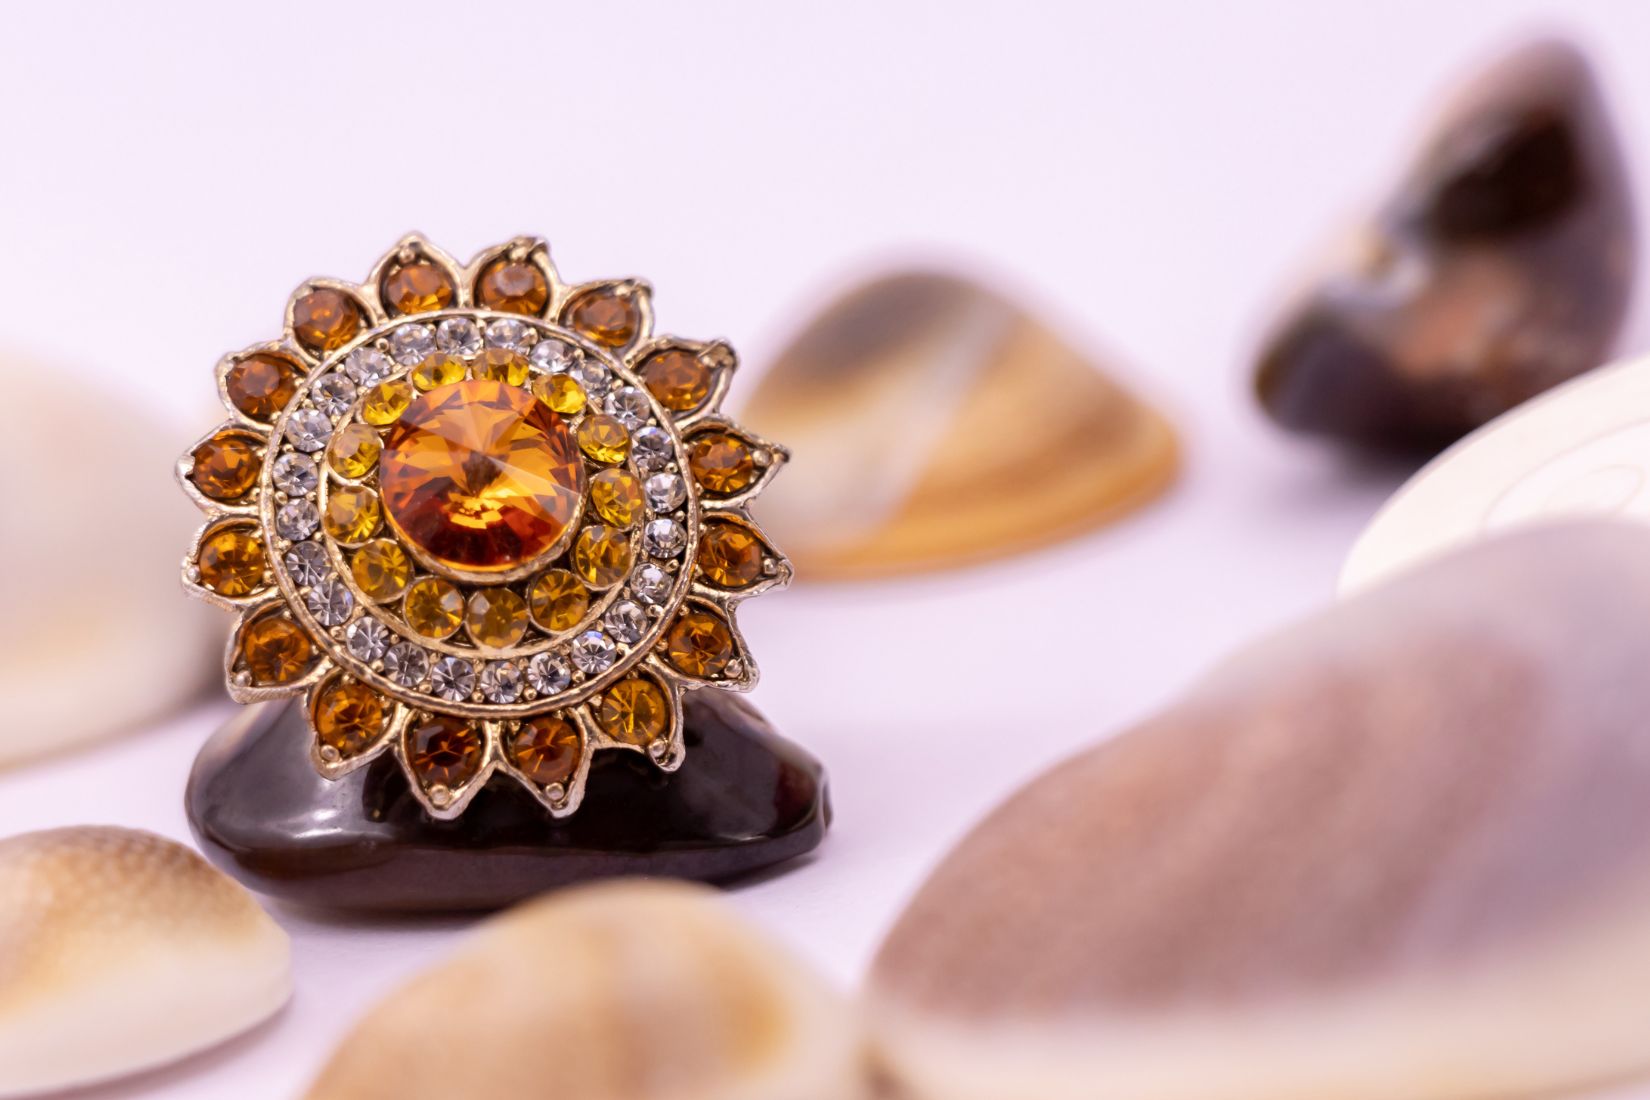 A beautiful Saffron diamond iconic engagement ring